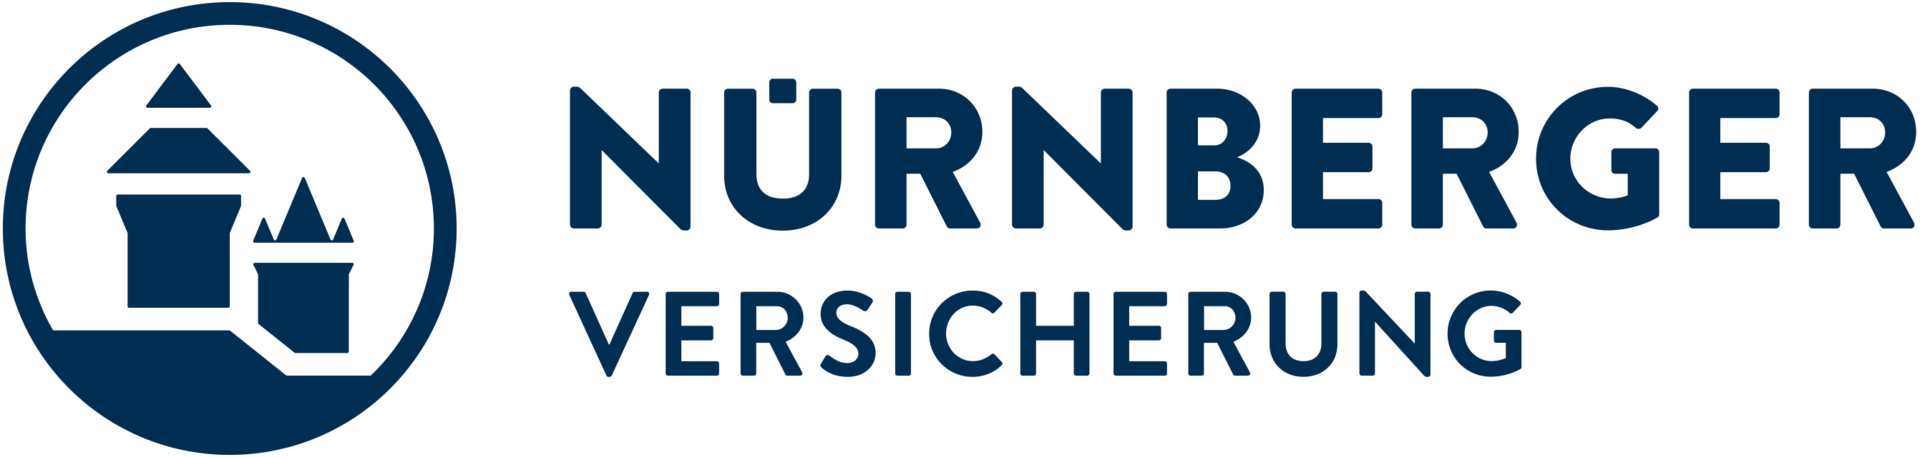 logo nürnberger